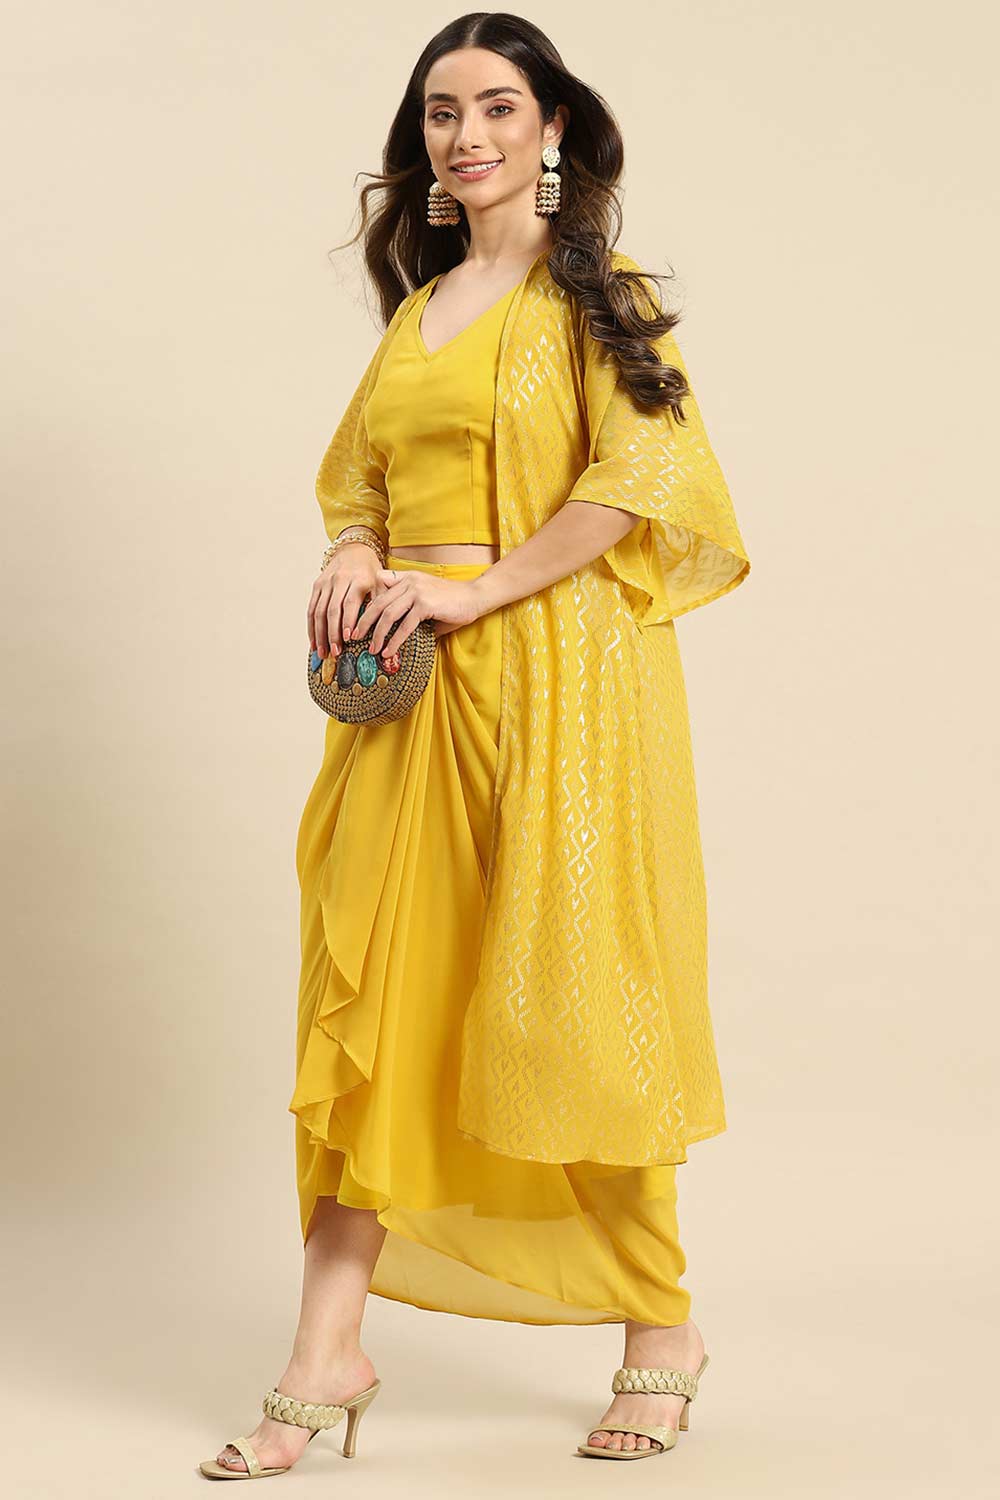 Haldi Partywear Indowestern Skirt Top Shrug Set | Fusion Fashion Dress